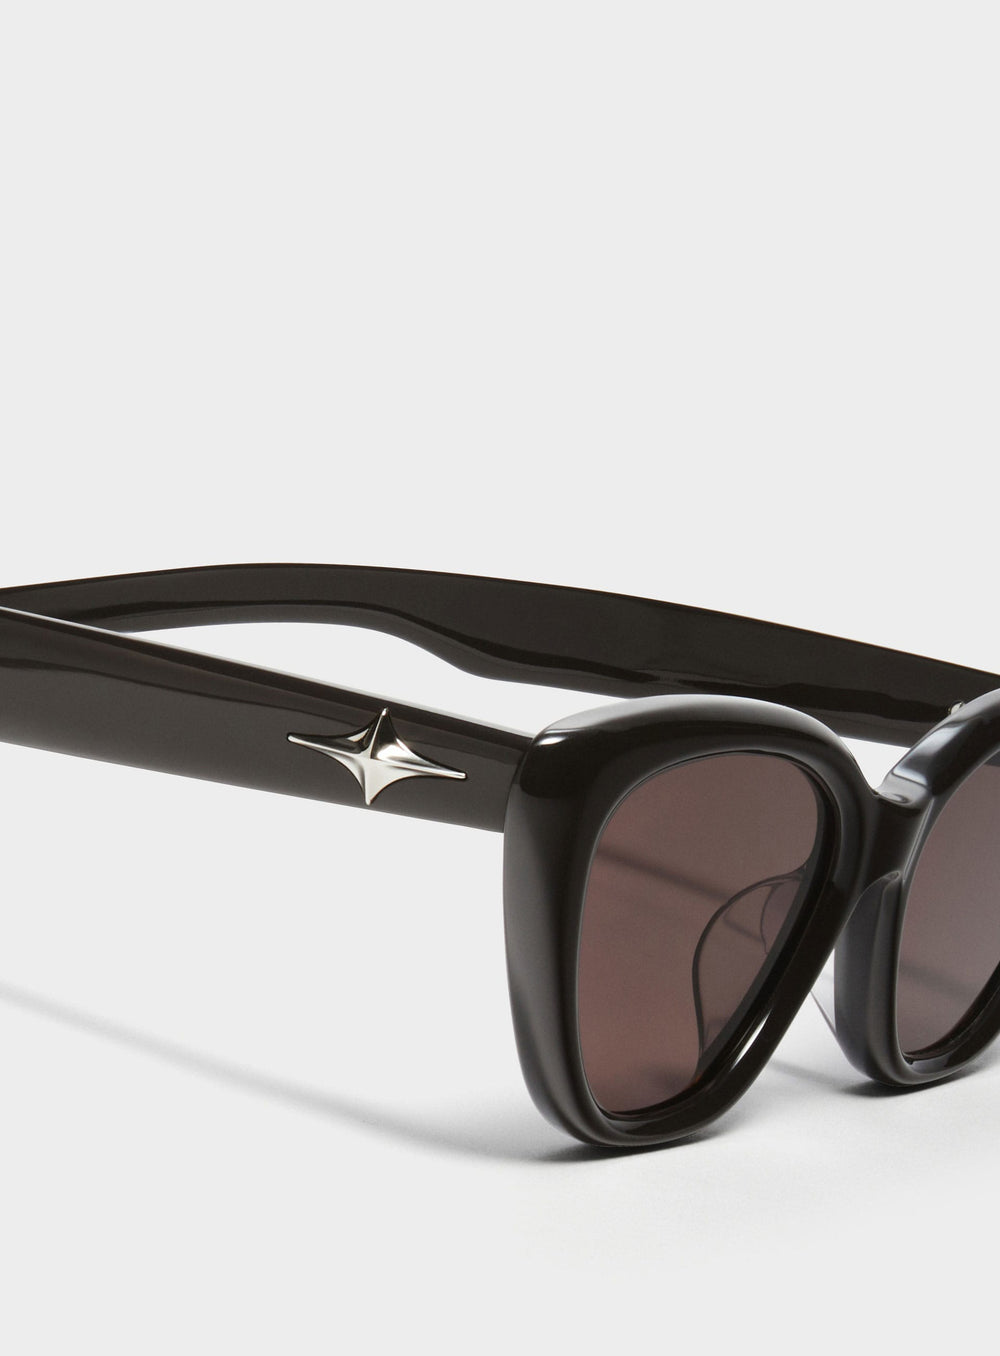 Close-up of Virgo in black cat-eye Sunglasses lenses, high-quality eyewear by Mercury Retrograde Galaxy Collection 